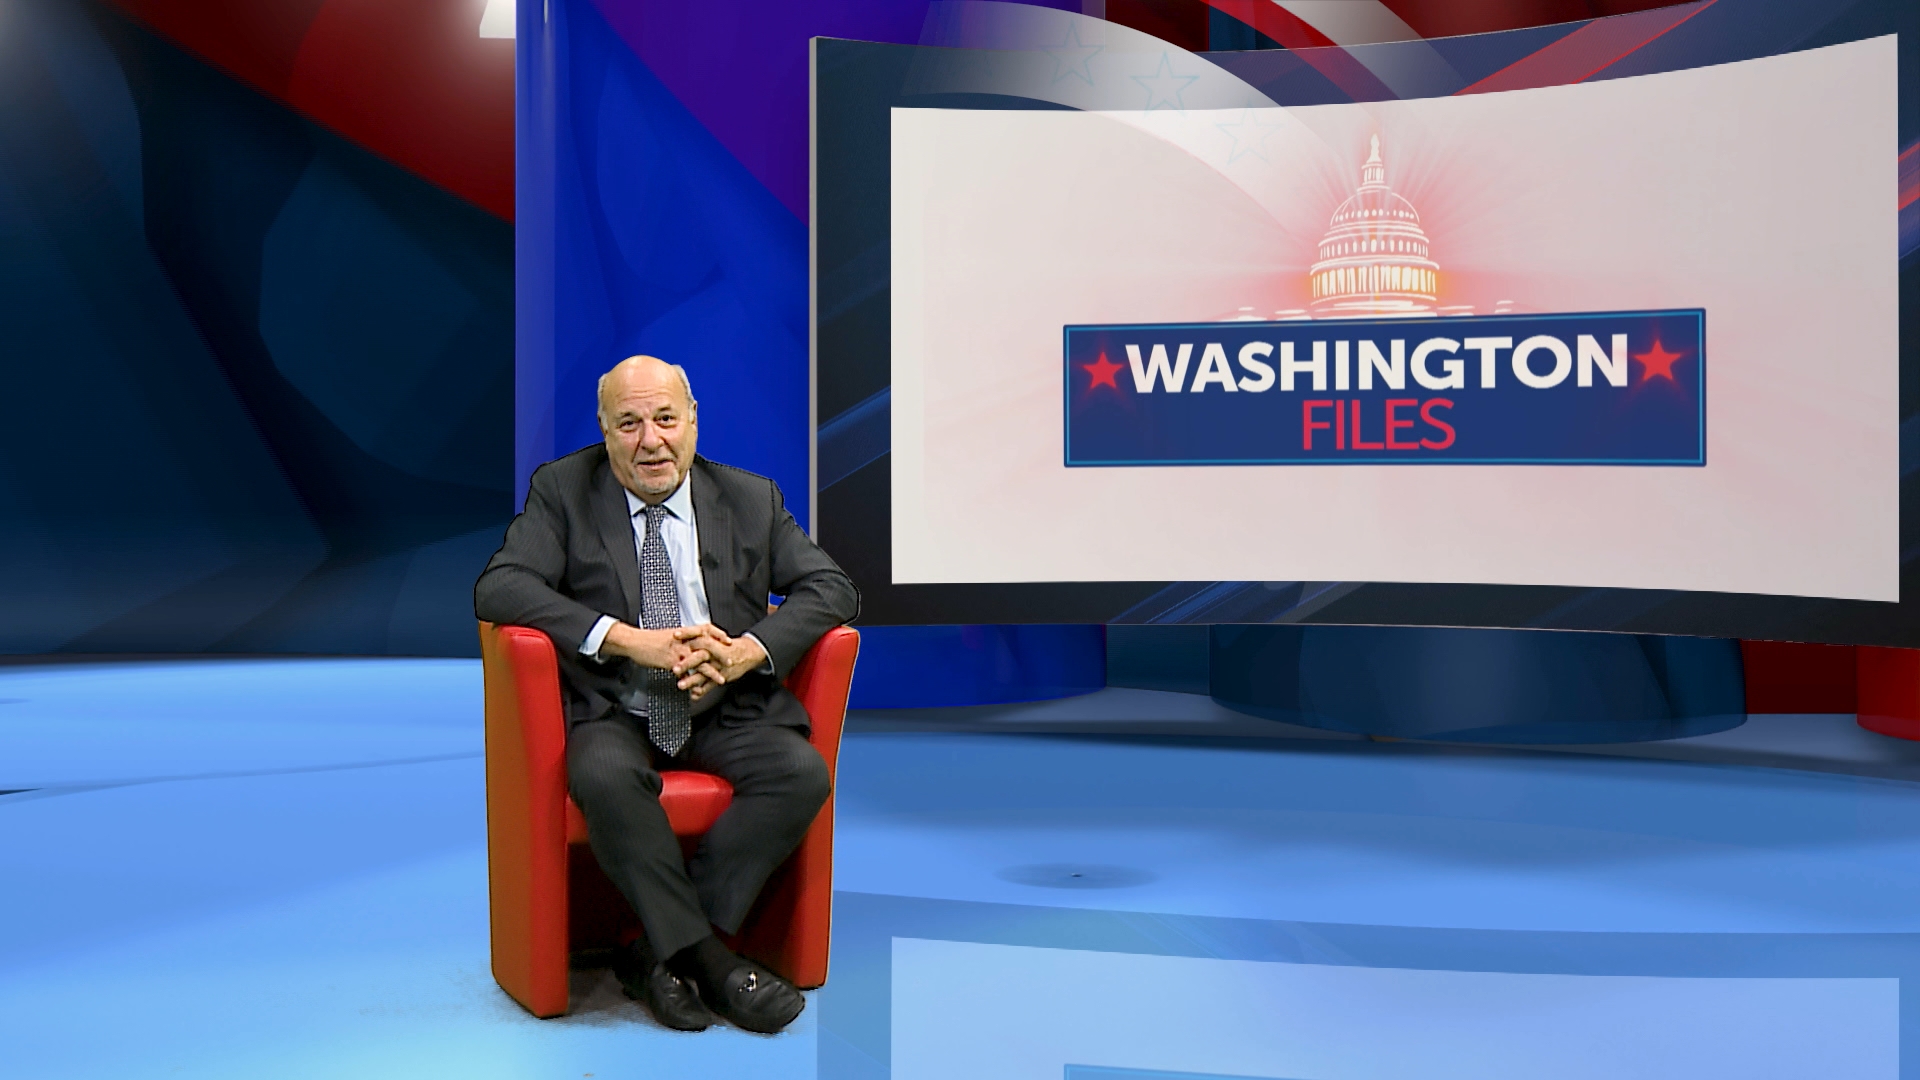 Lunedì torna l’appuntamento con i Washington Files di Alan Friedman su San Marino RTV